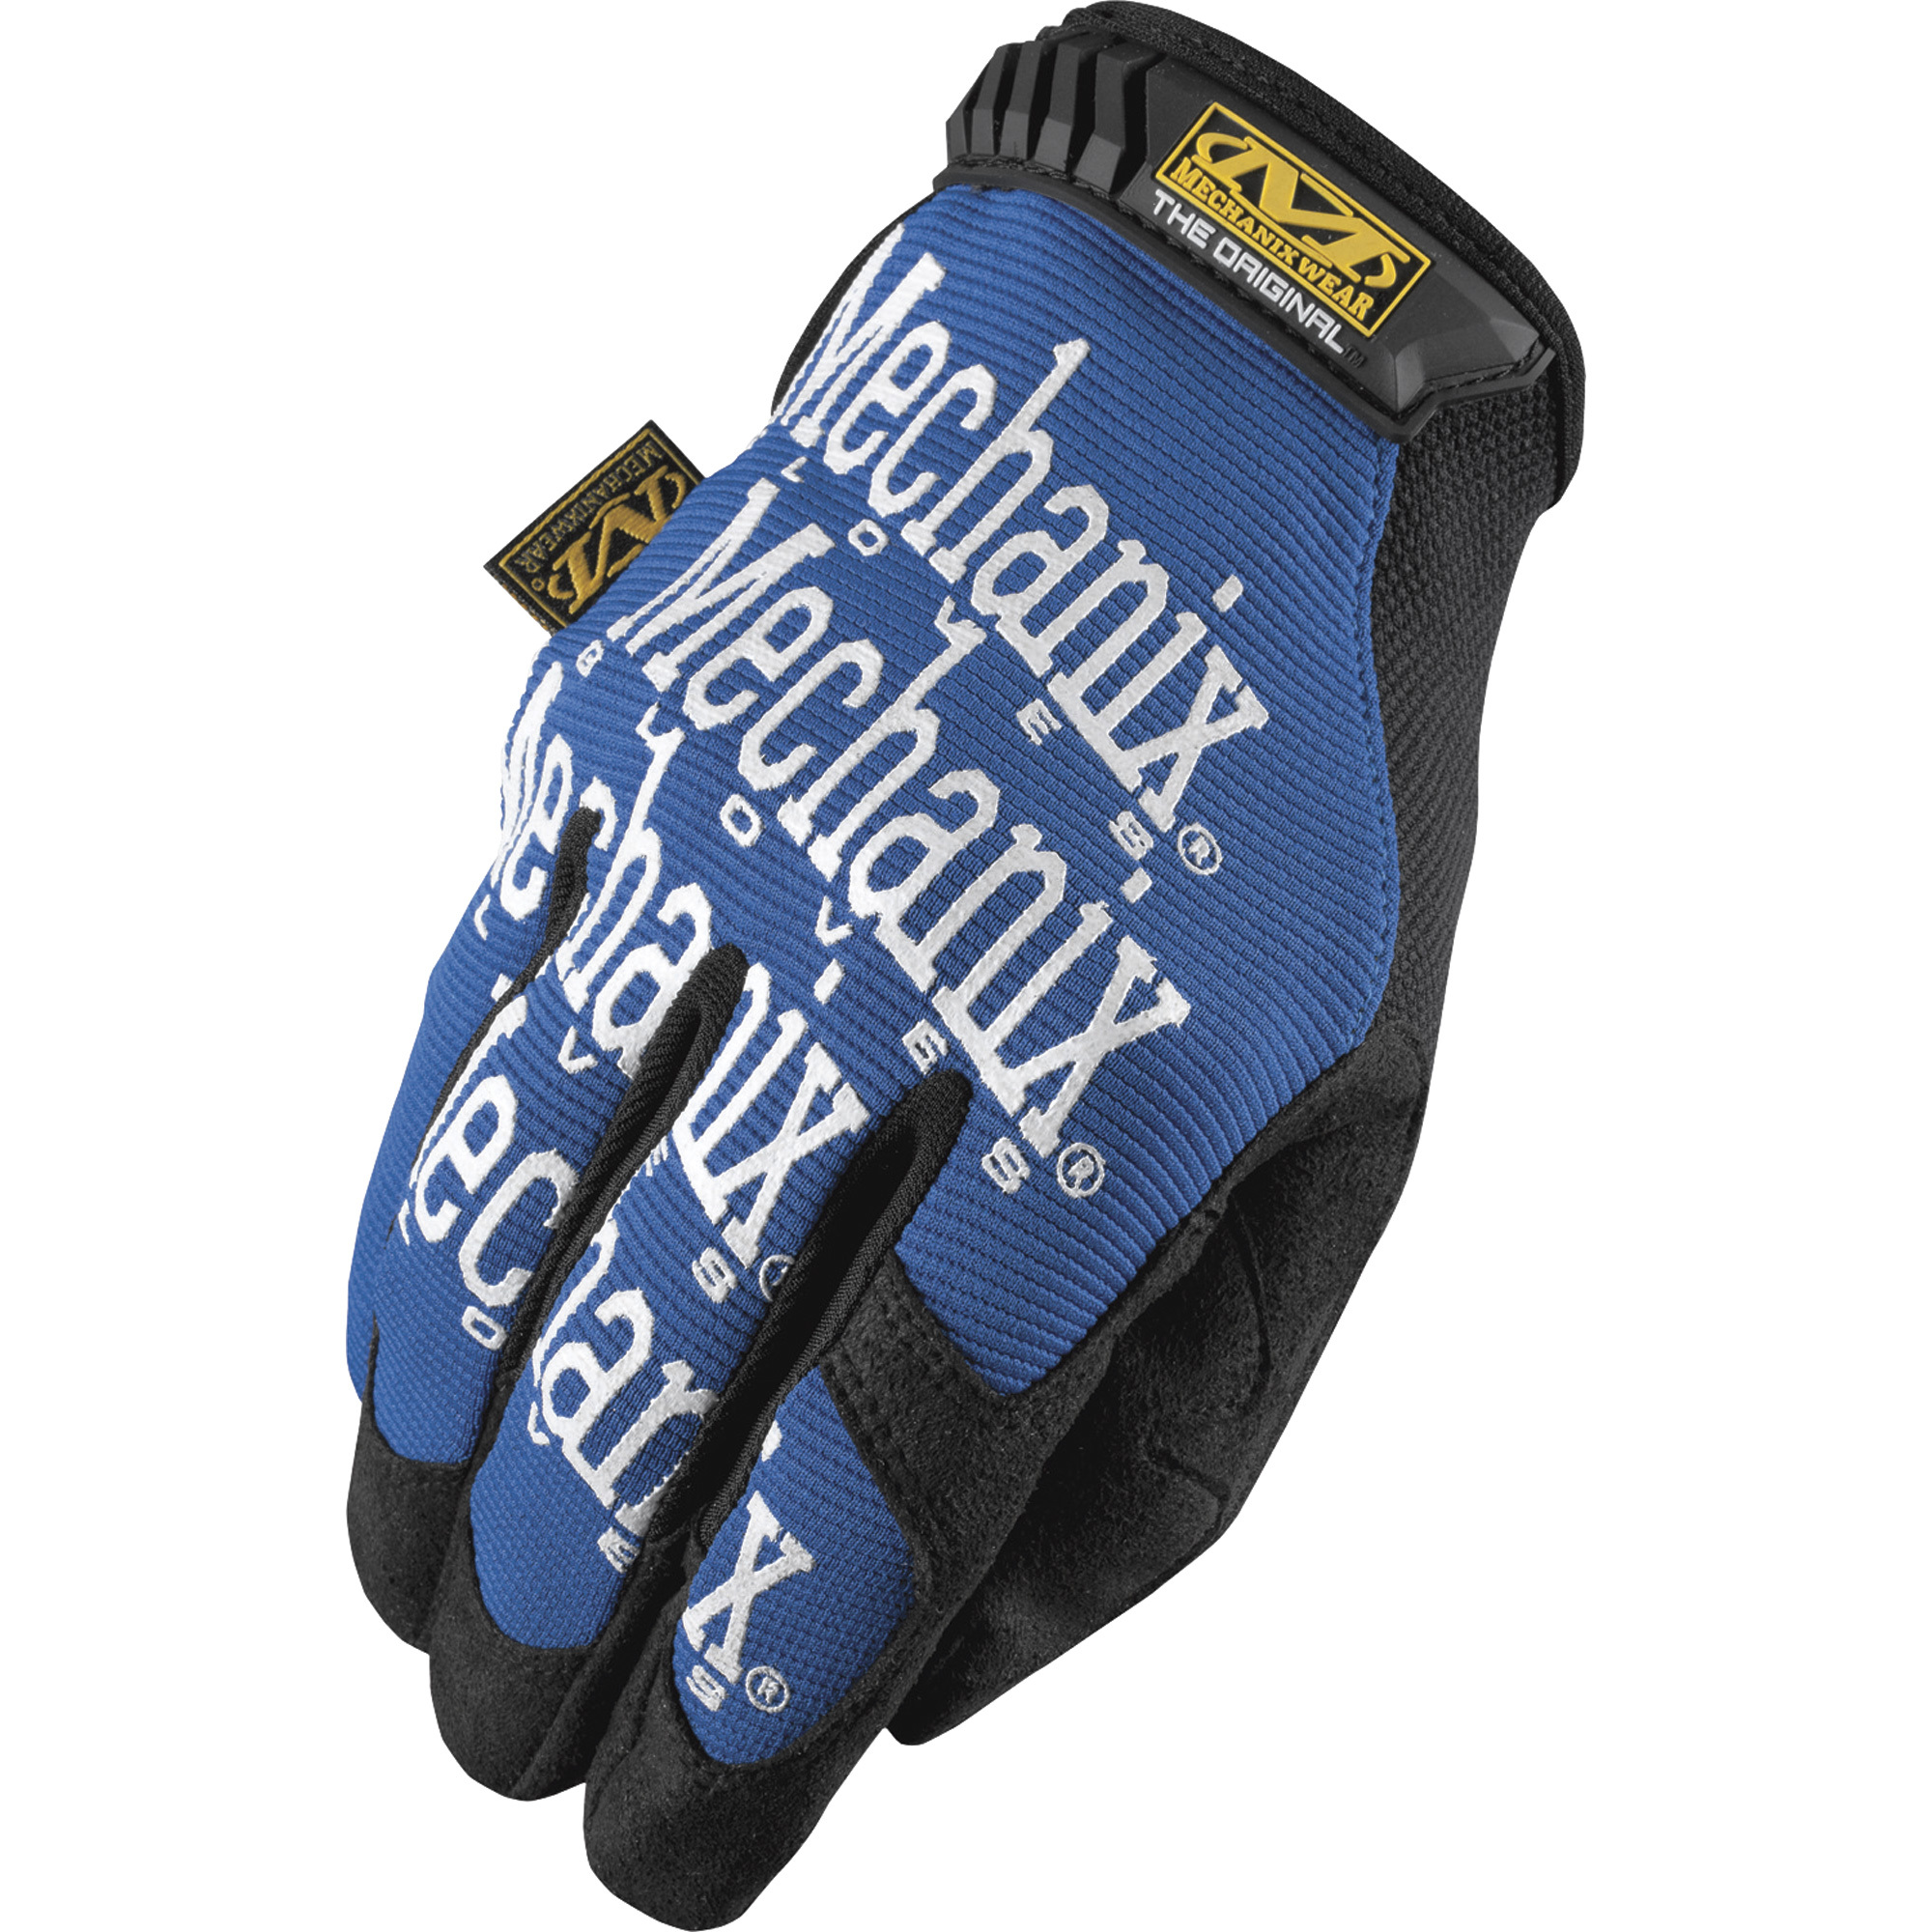 Mechanix Men's Wear Original Gloves - Blue, Medium, Model MG-03-009